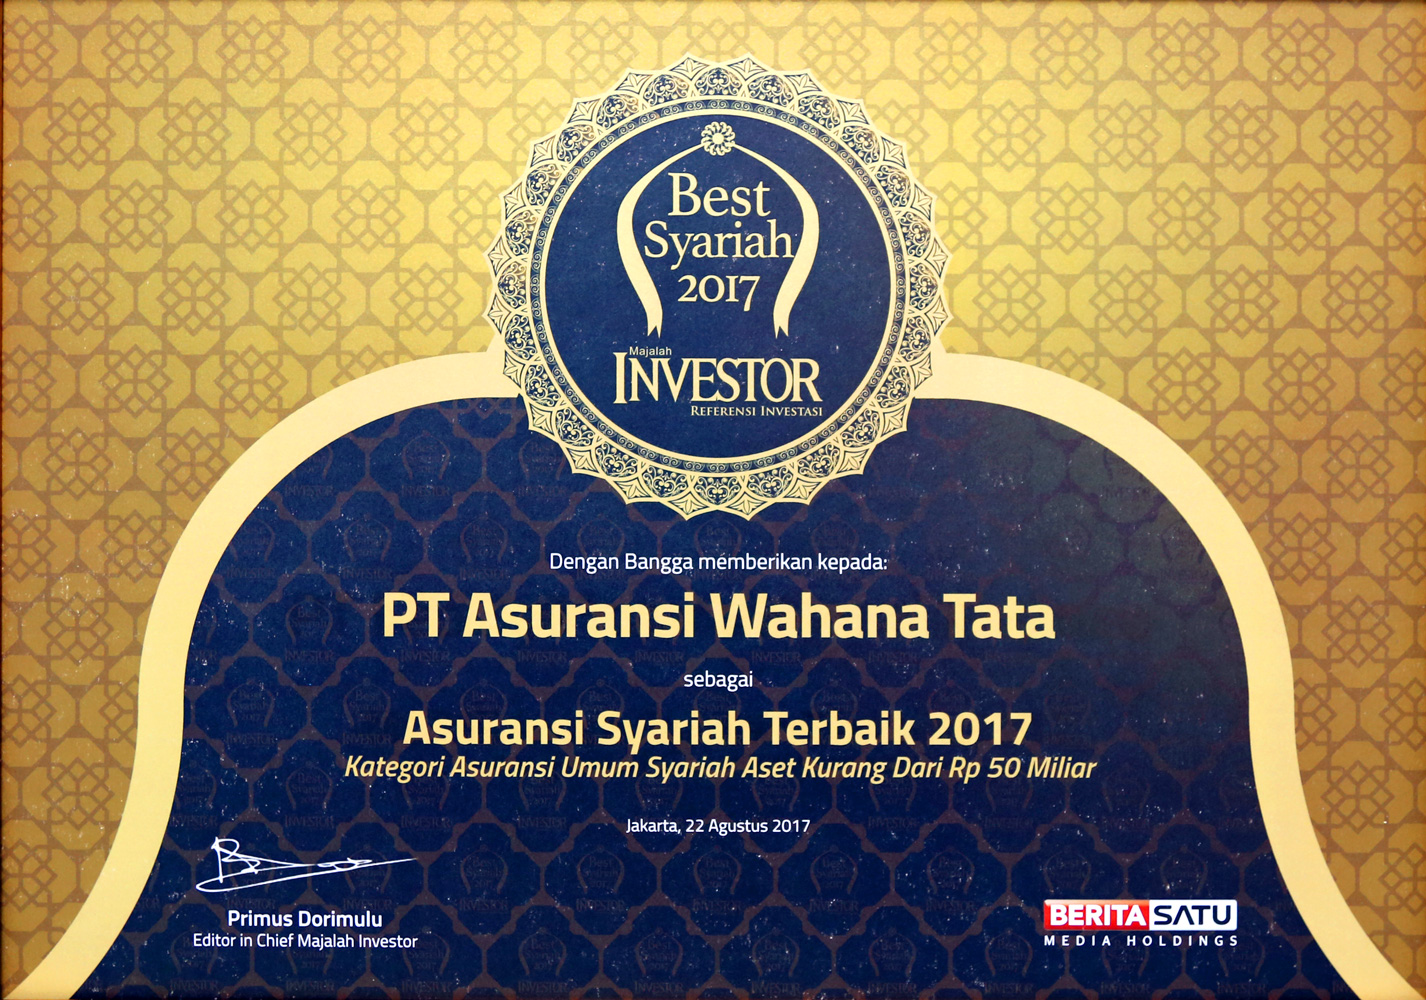 Investor BestSyariah 2017